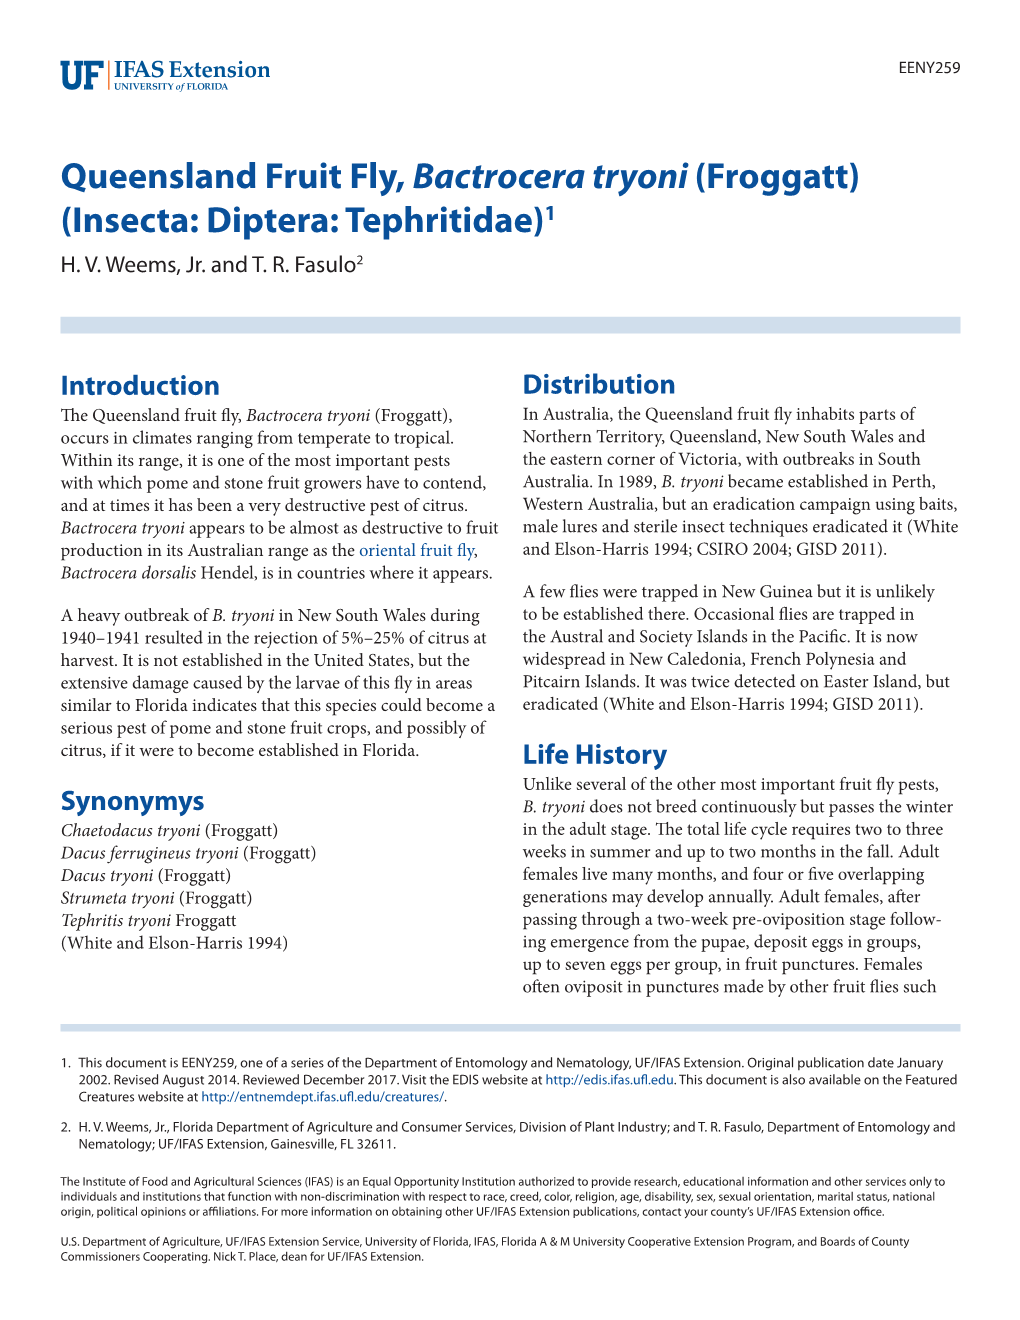 Queensland Fruit Fly, Bactrocera Tryoni (Froggatt) (Insecta: Diptera: Tephritidae)1 H